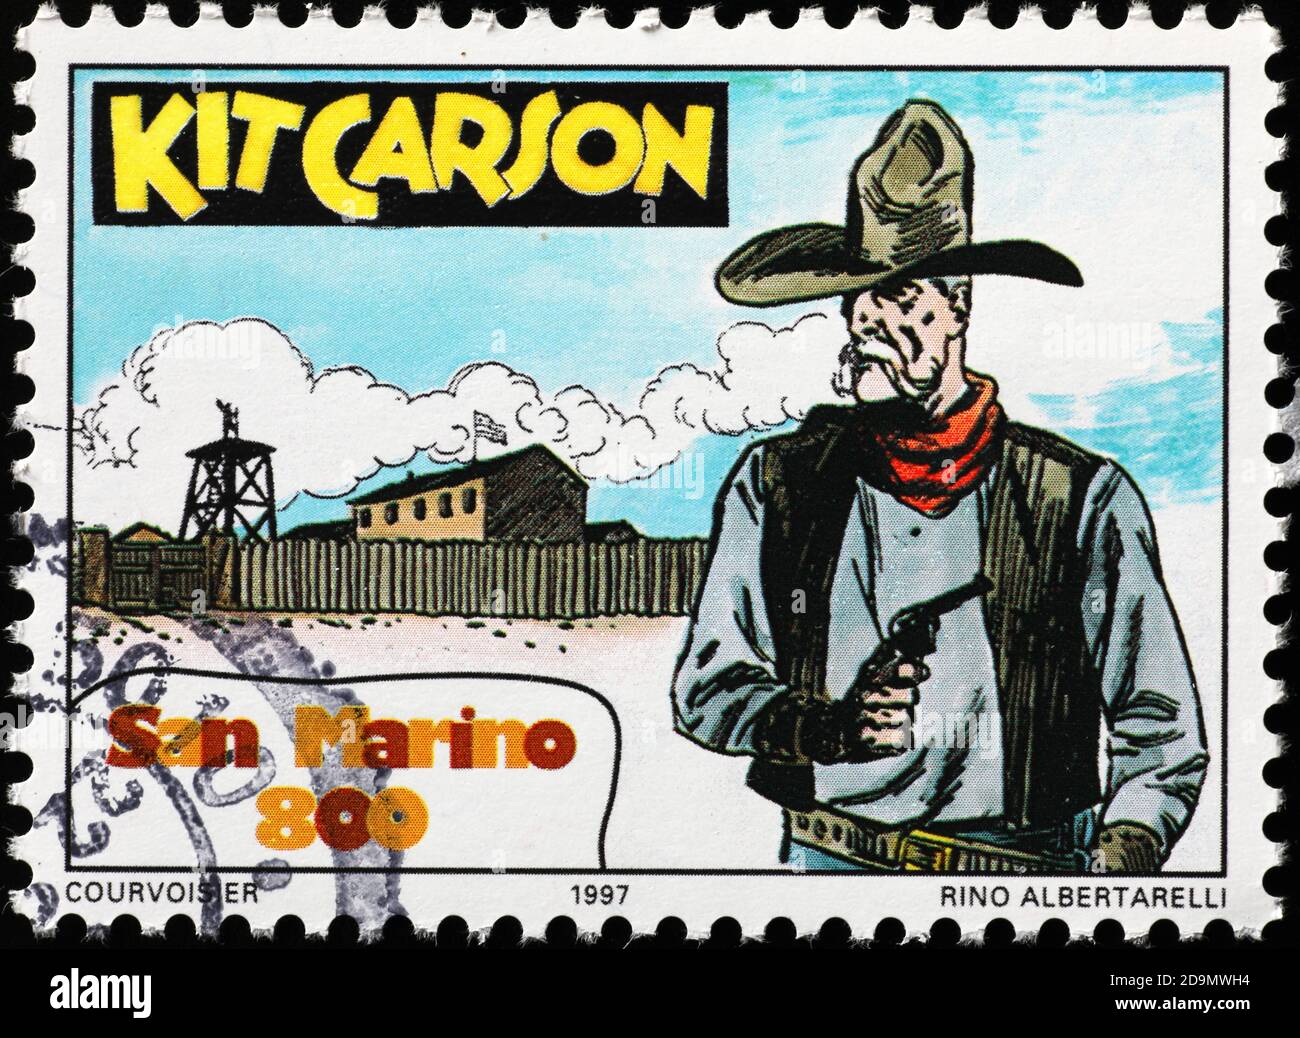 Alte italienische Karikatur Kit Carson auf Briefmarke Stockfoto